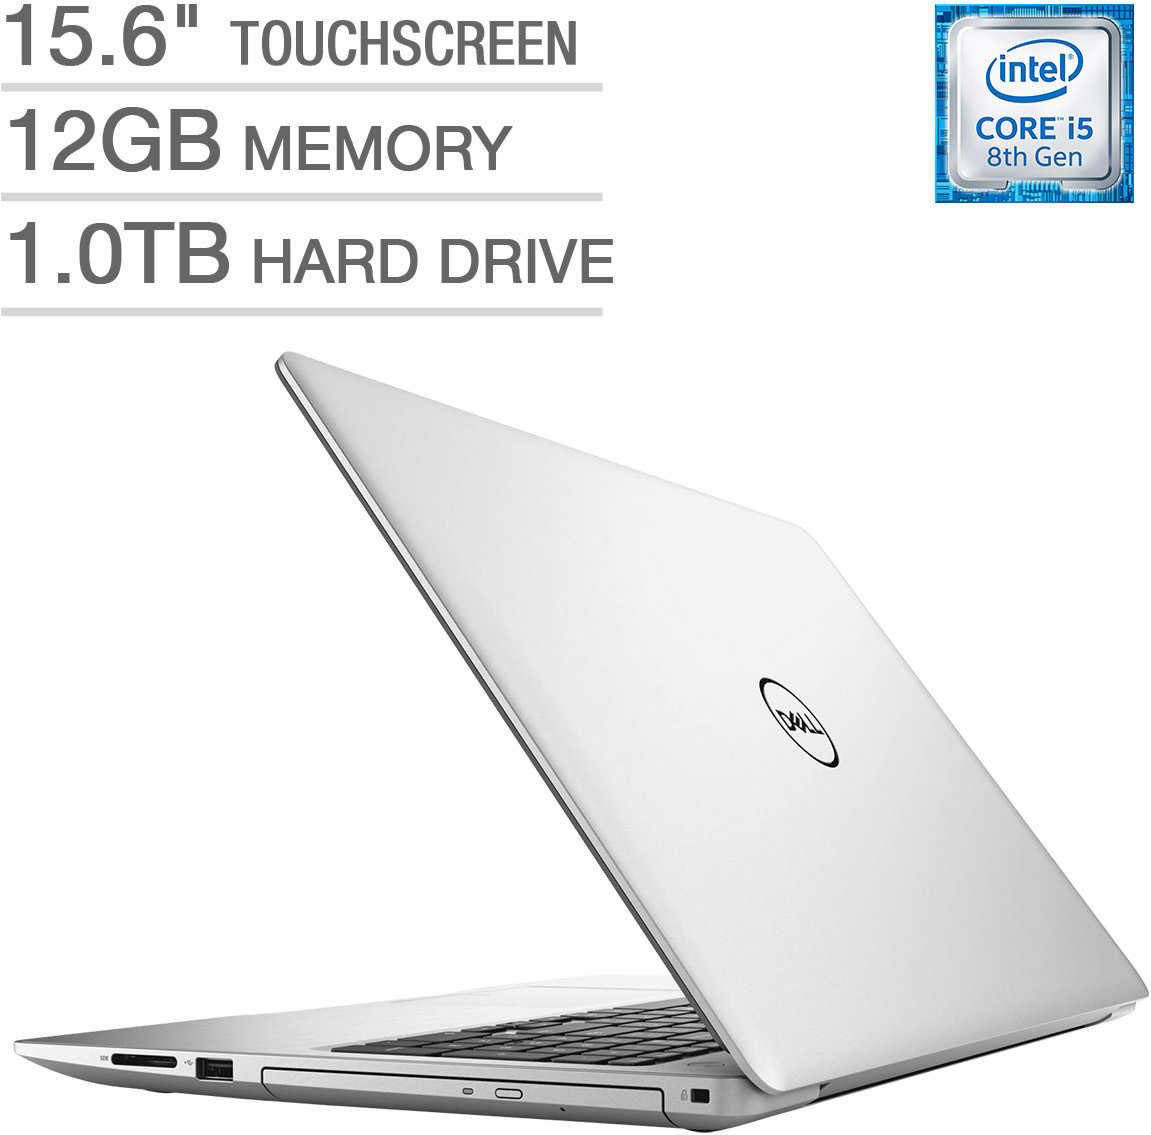 Dell Inspiron 15 5000 15.6-inch Touchscreen FHD 1080p Premium Laptop, Intel Quad Core i5-8250U Processor, 12GB RAM, 1TB Hard Drive, DVD Writer, Backlit Keyboard, Bluetooth, Silver